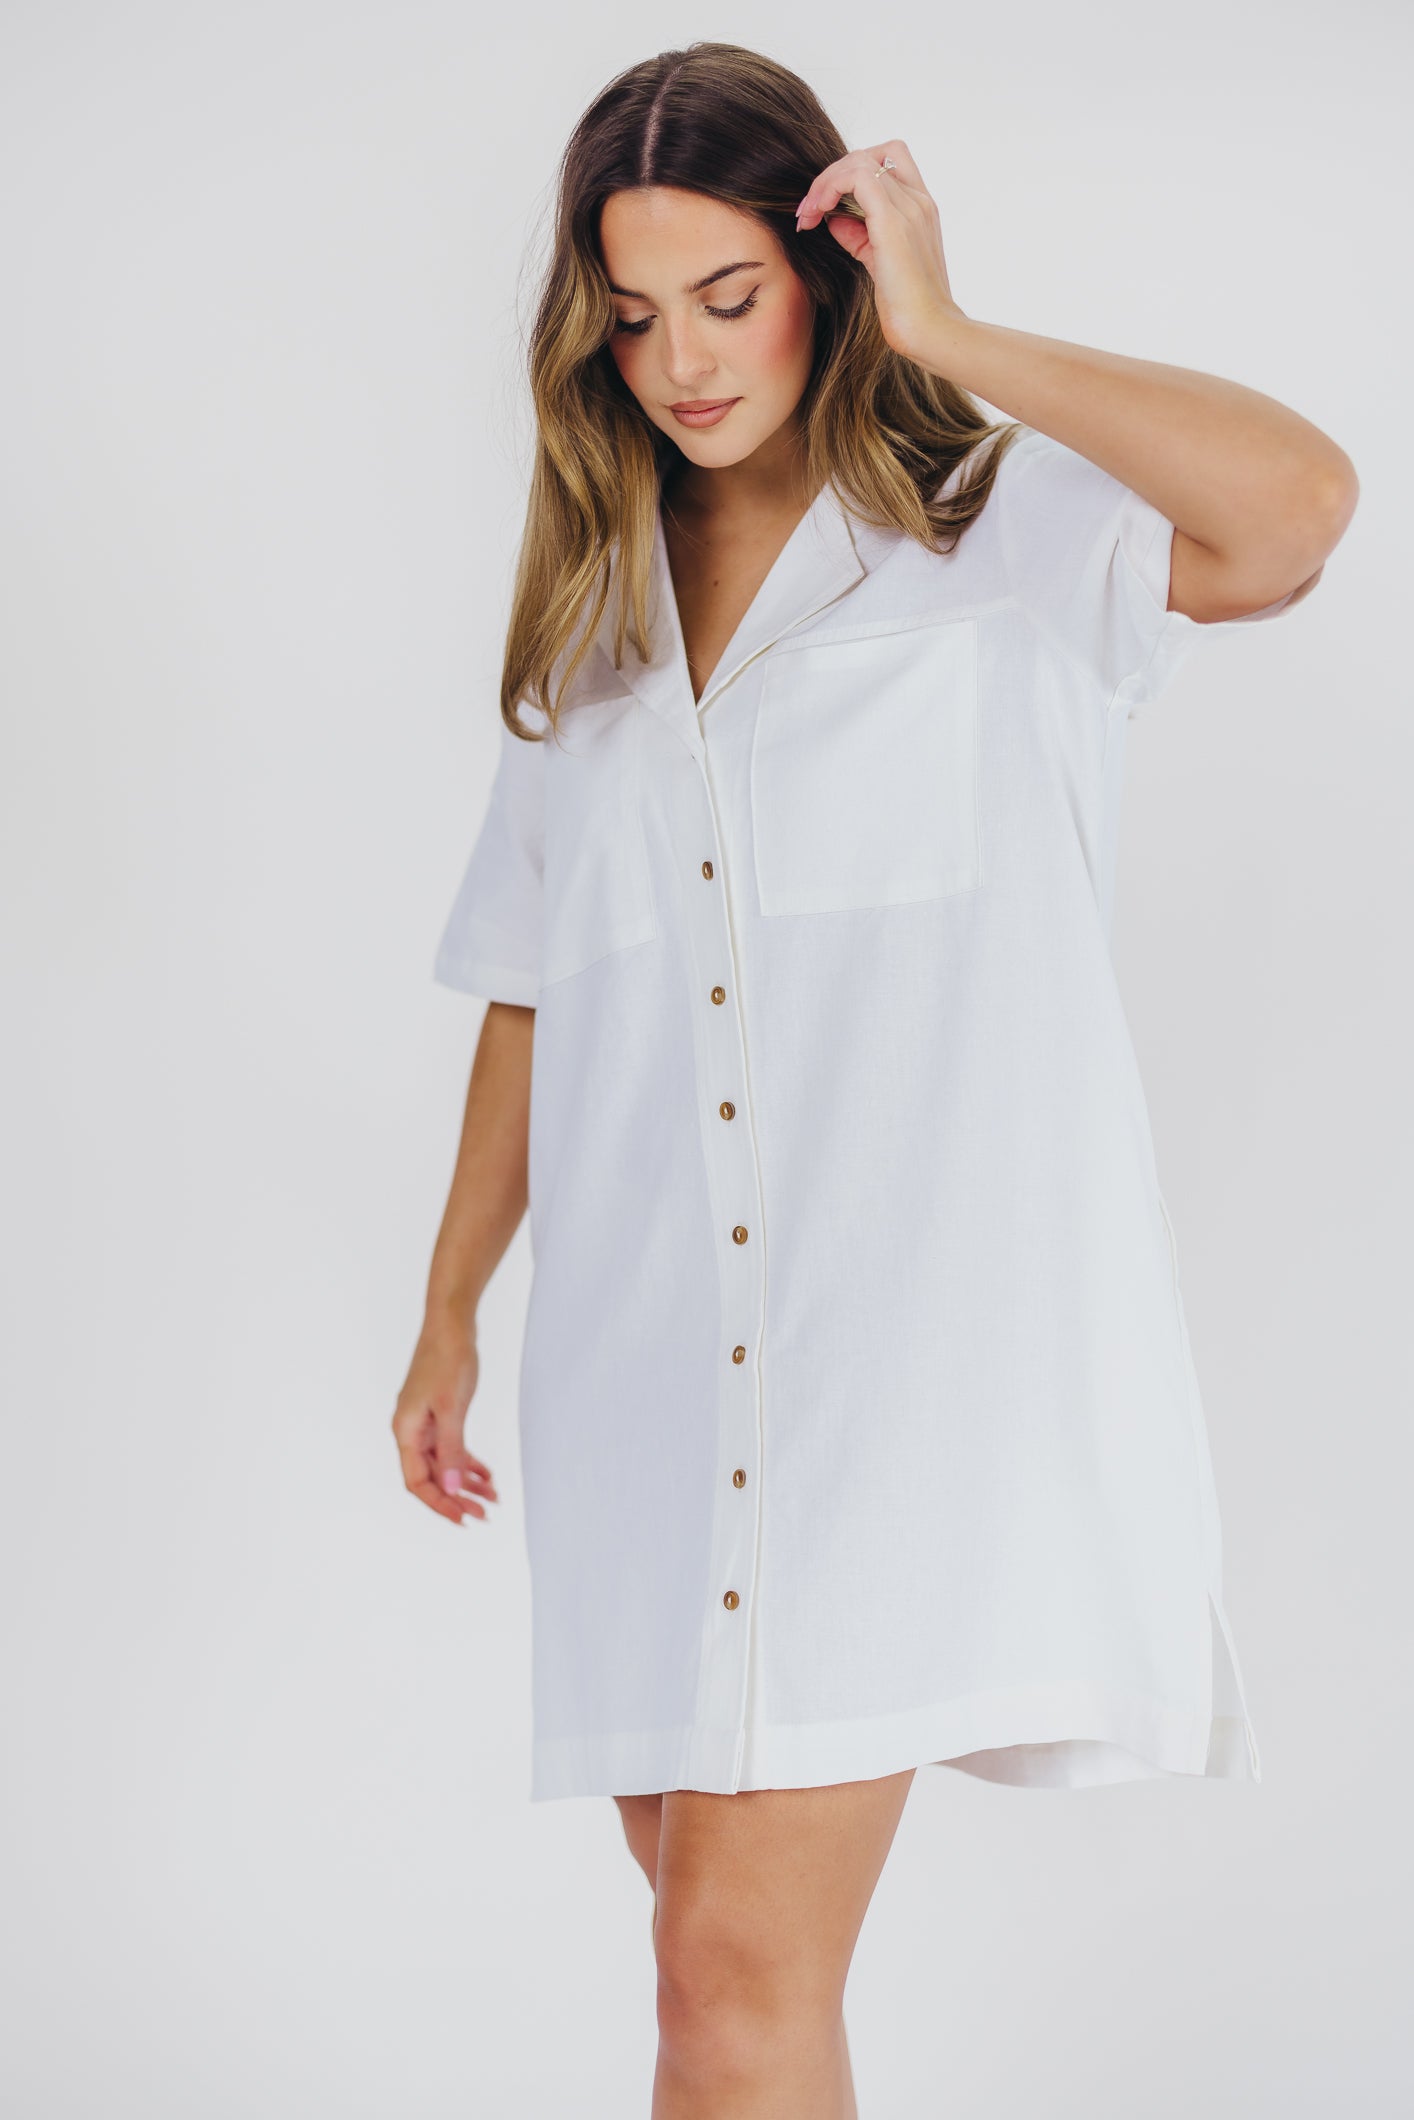 Kristen Button-Up Shirt Dress in Cotton - Nursing Friendly